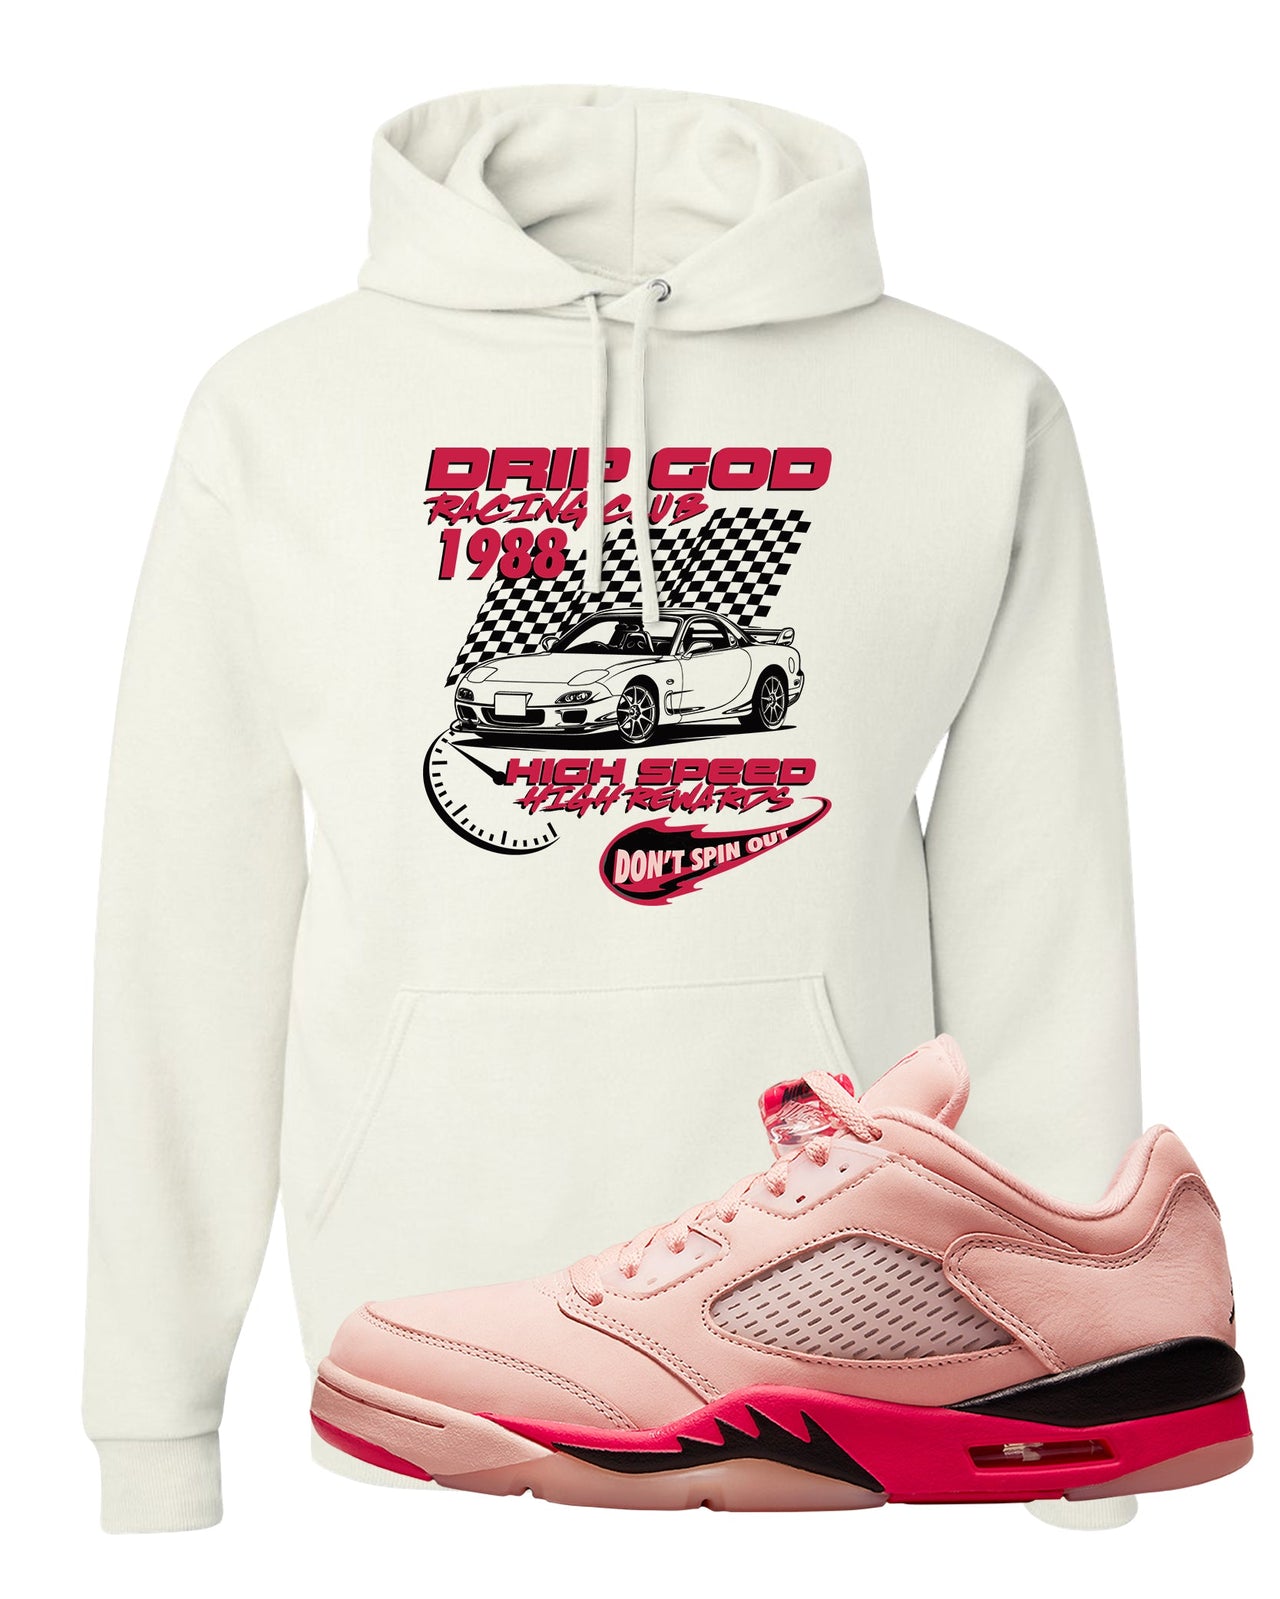 Arctic Pink Low 5s Hoodie | Drip God Racing Club, White